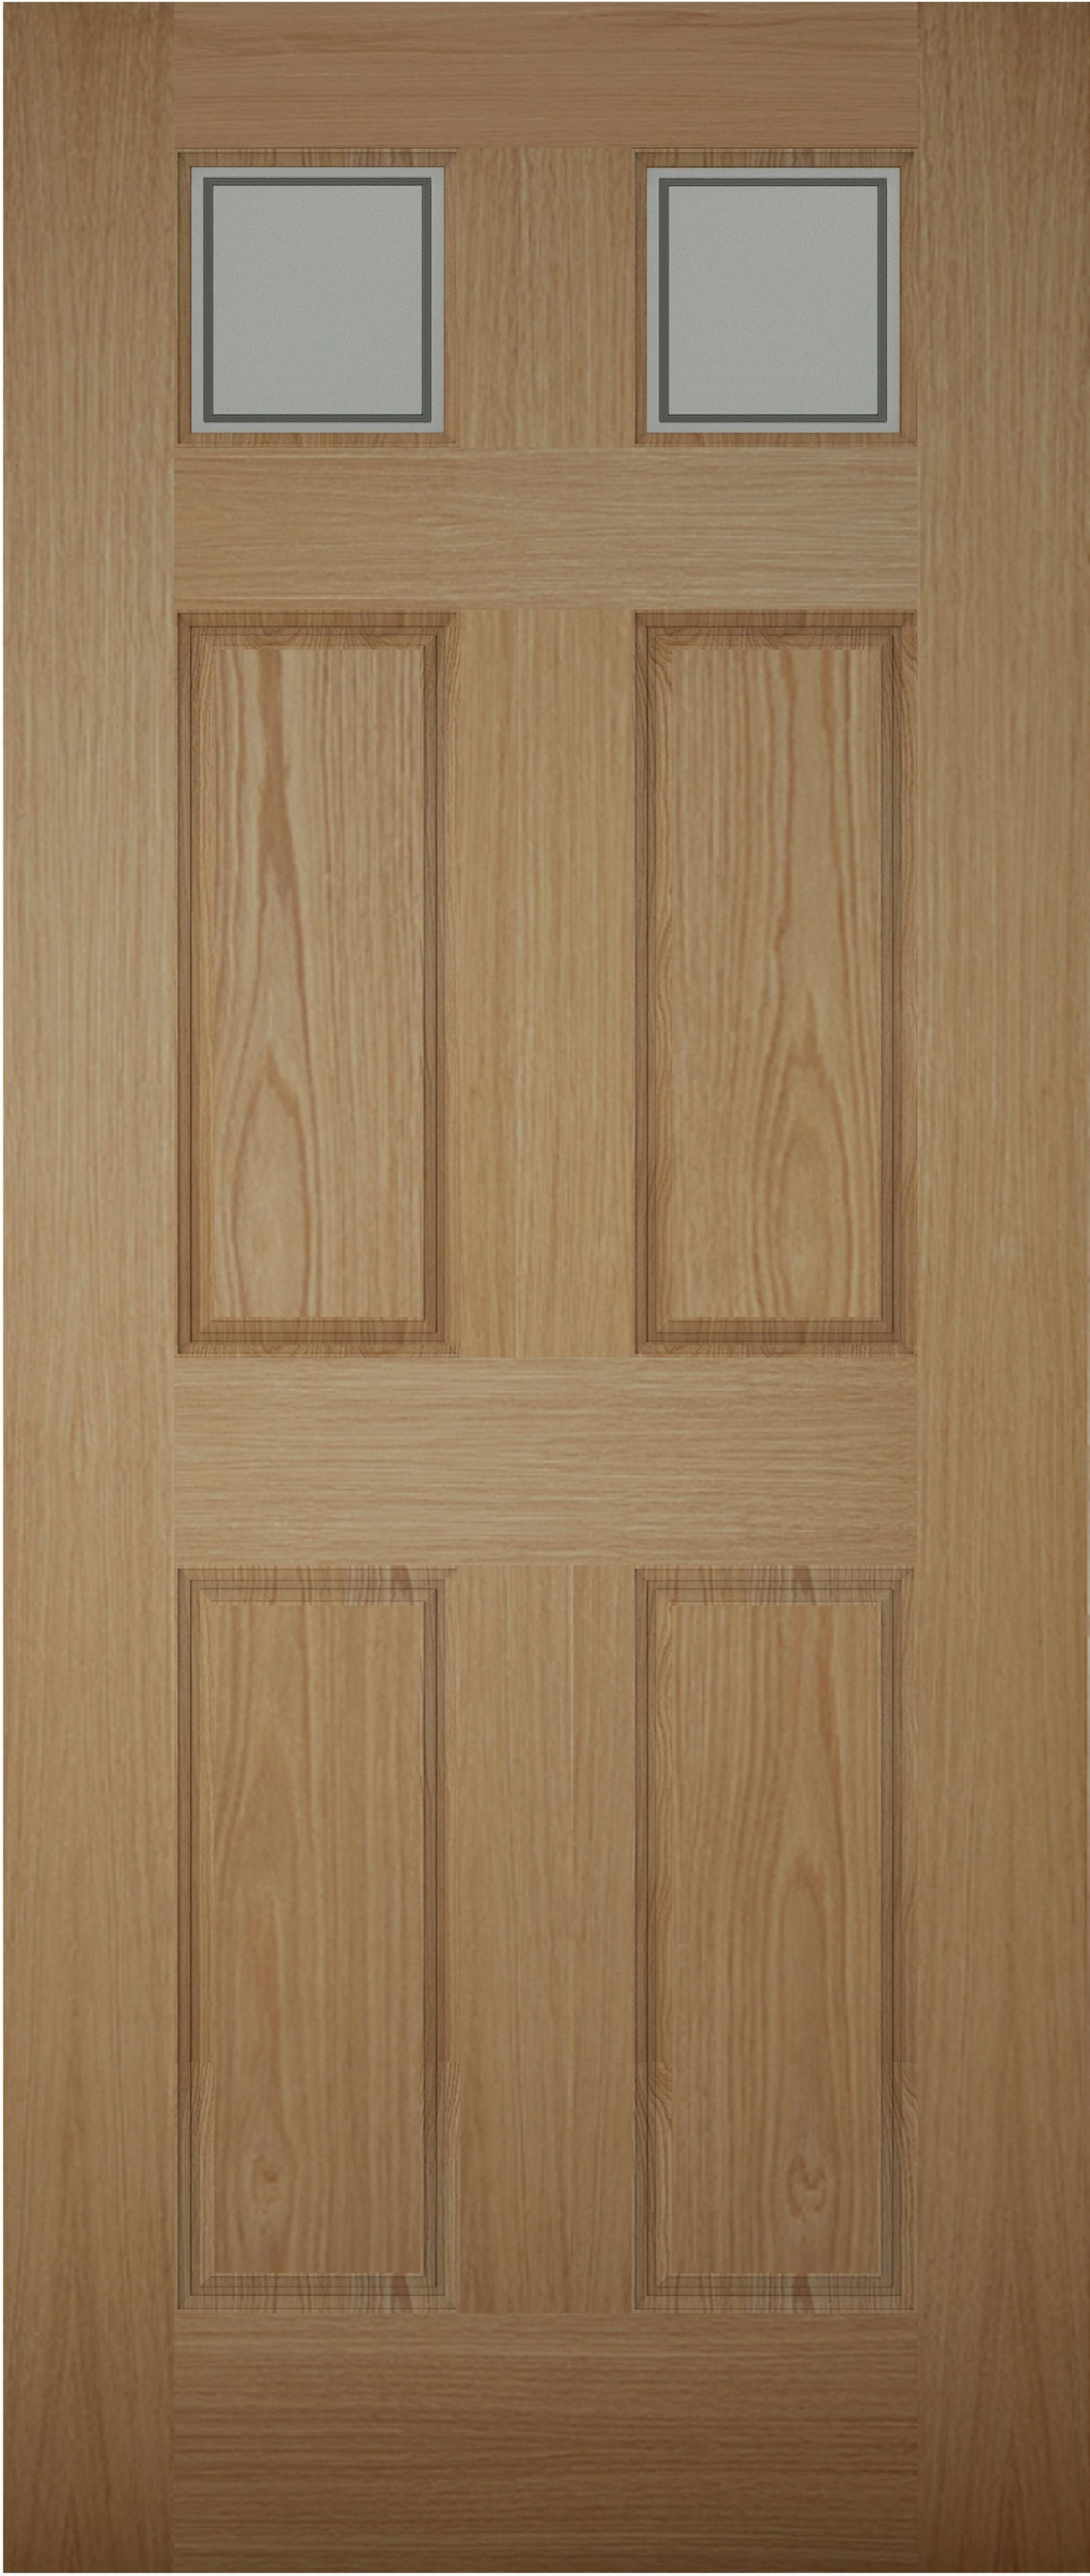 6 panel Frosted Glazed White oak veneer LH & RH External Front Door set